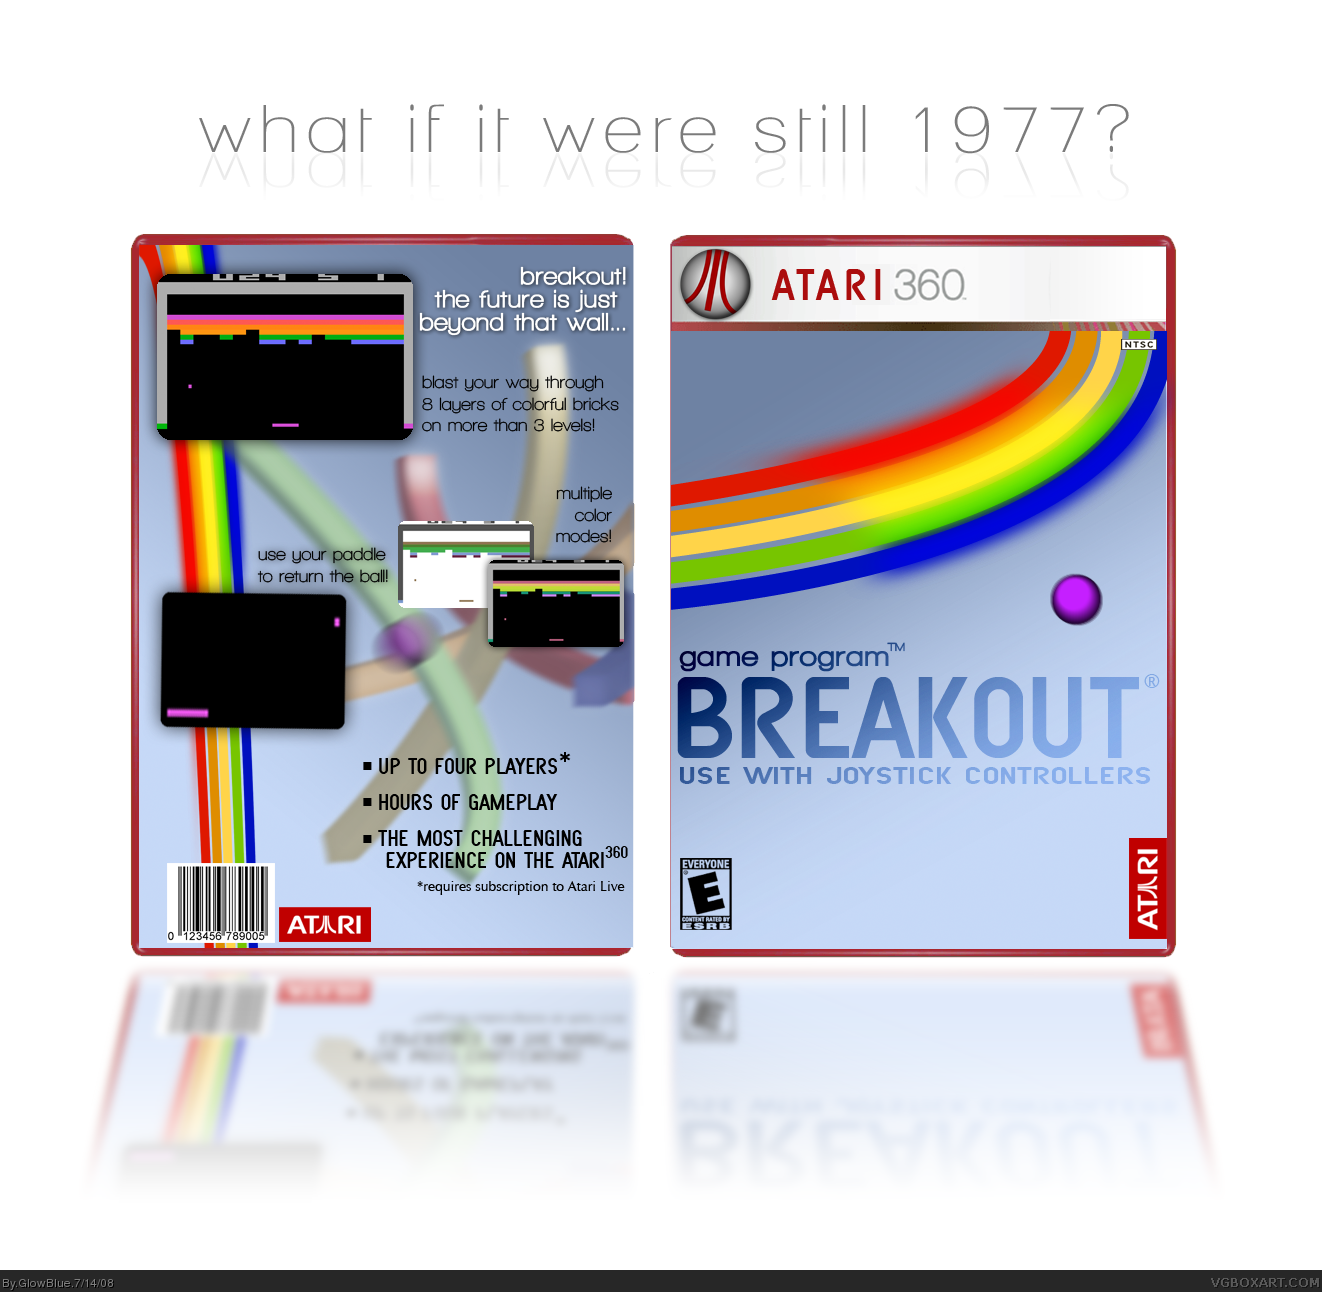 Breakout for the Atari360 box cover